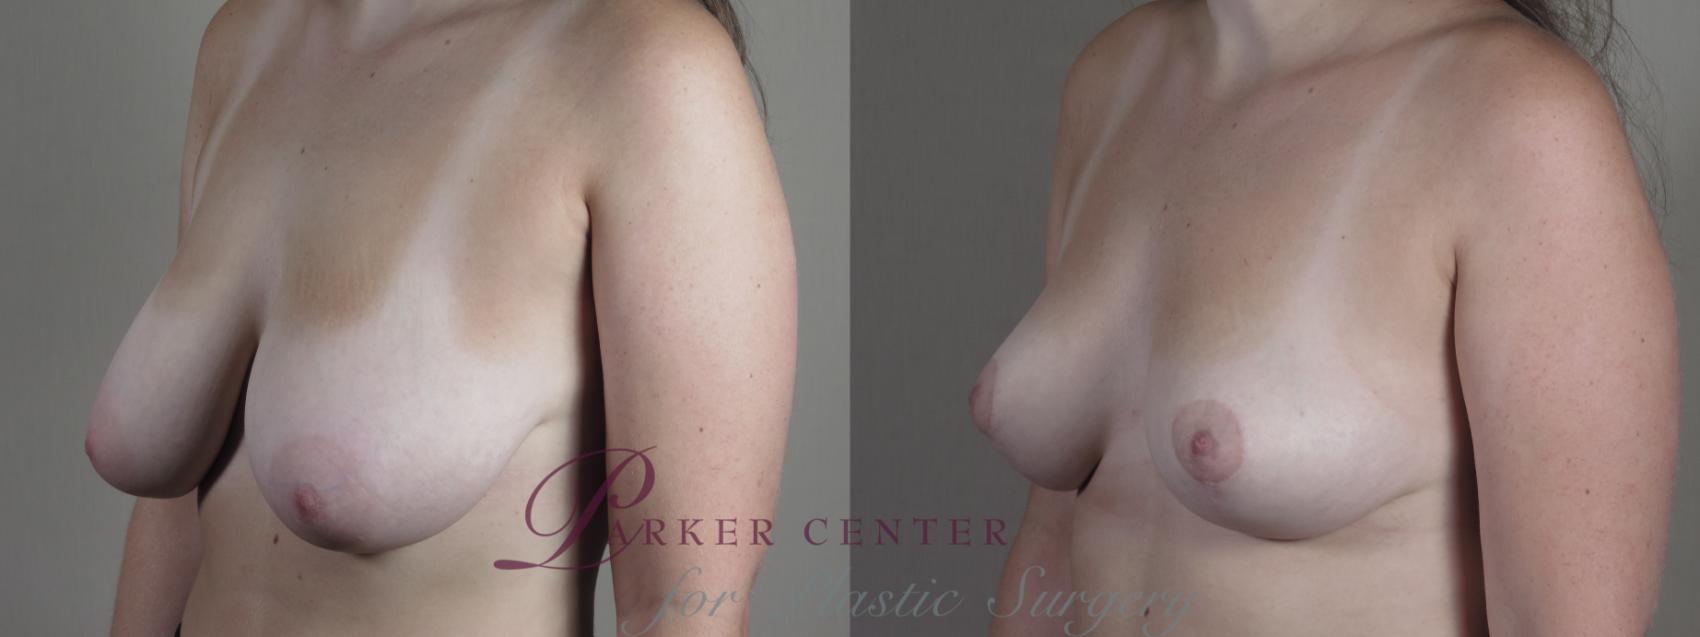 Breast Reduction Case 1331 Before & After Left Oblique | Paramus, New Jersey | Parker Center for Plastic Surgery